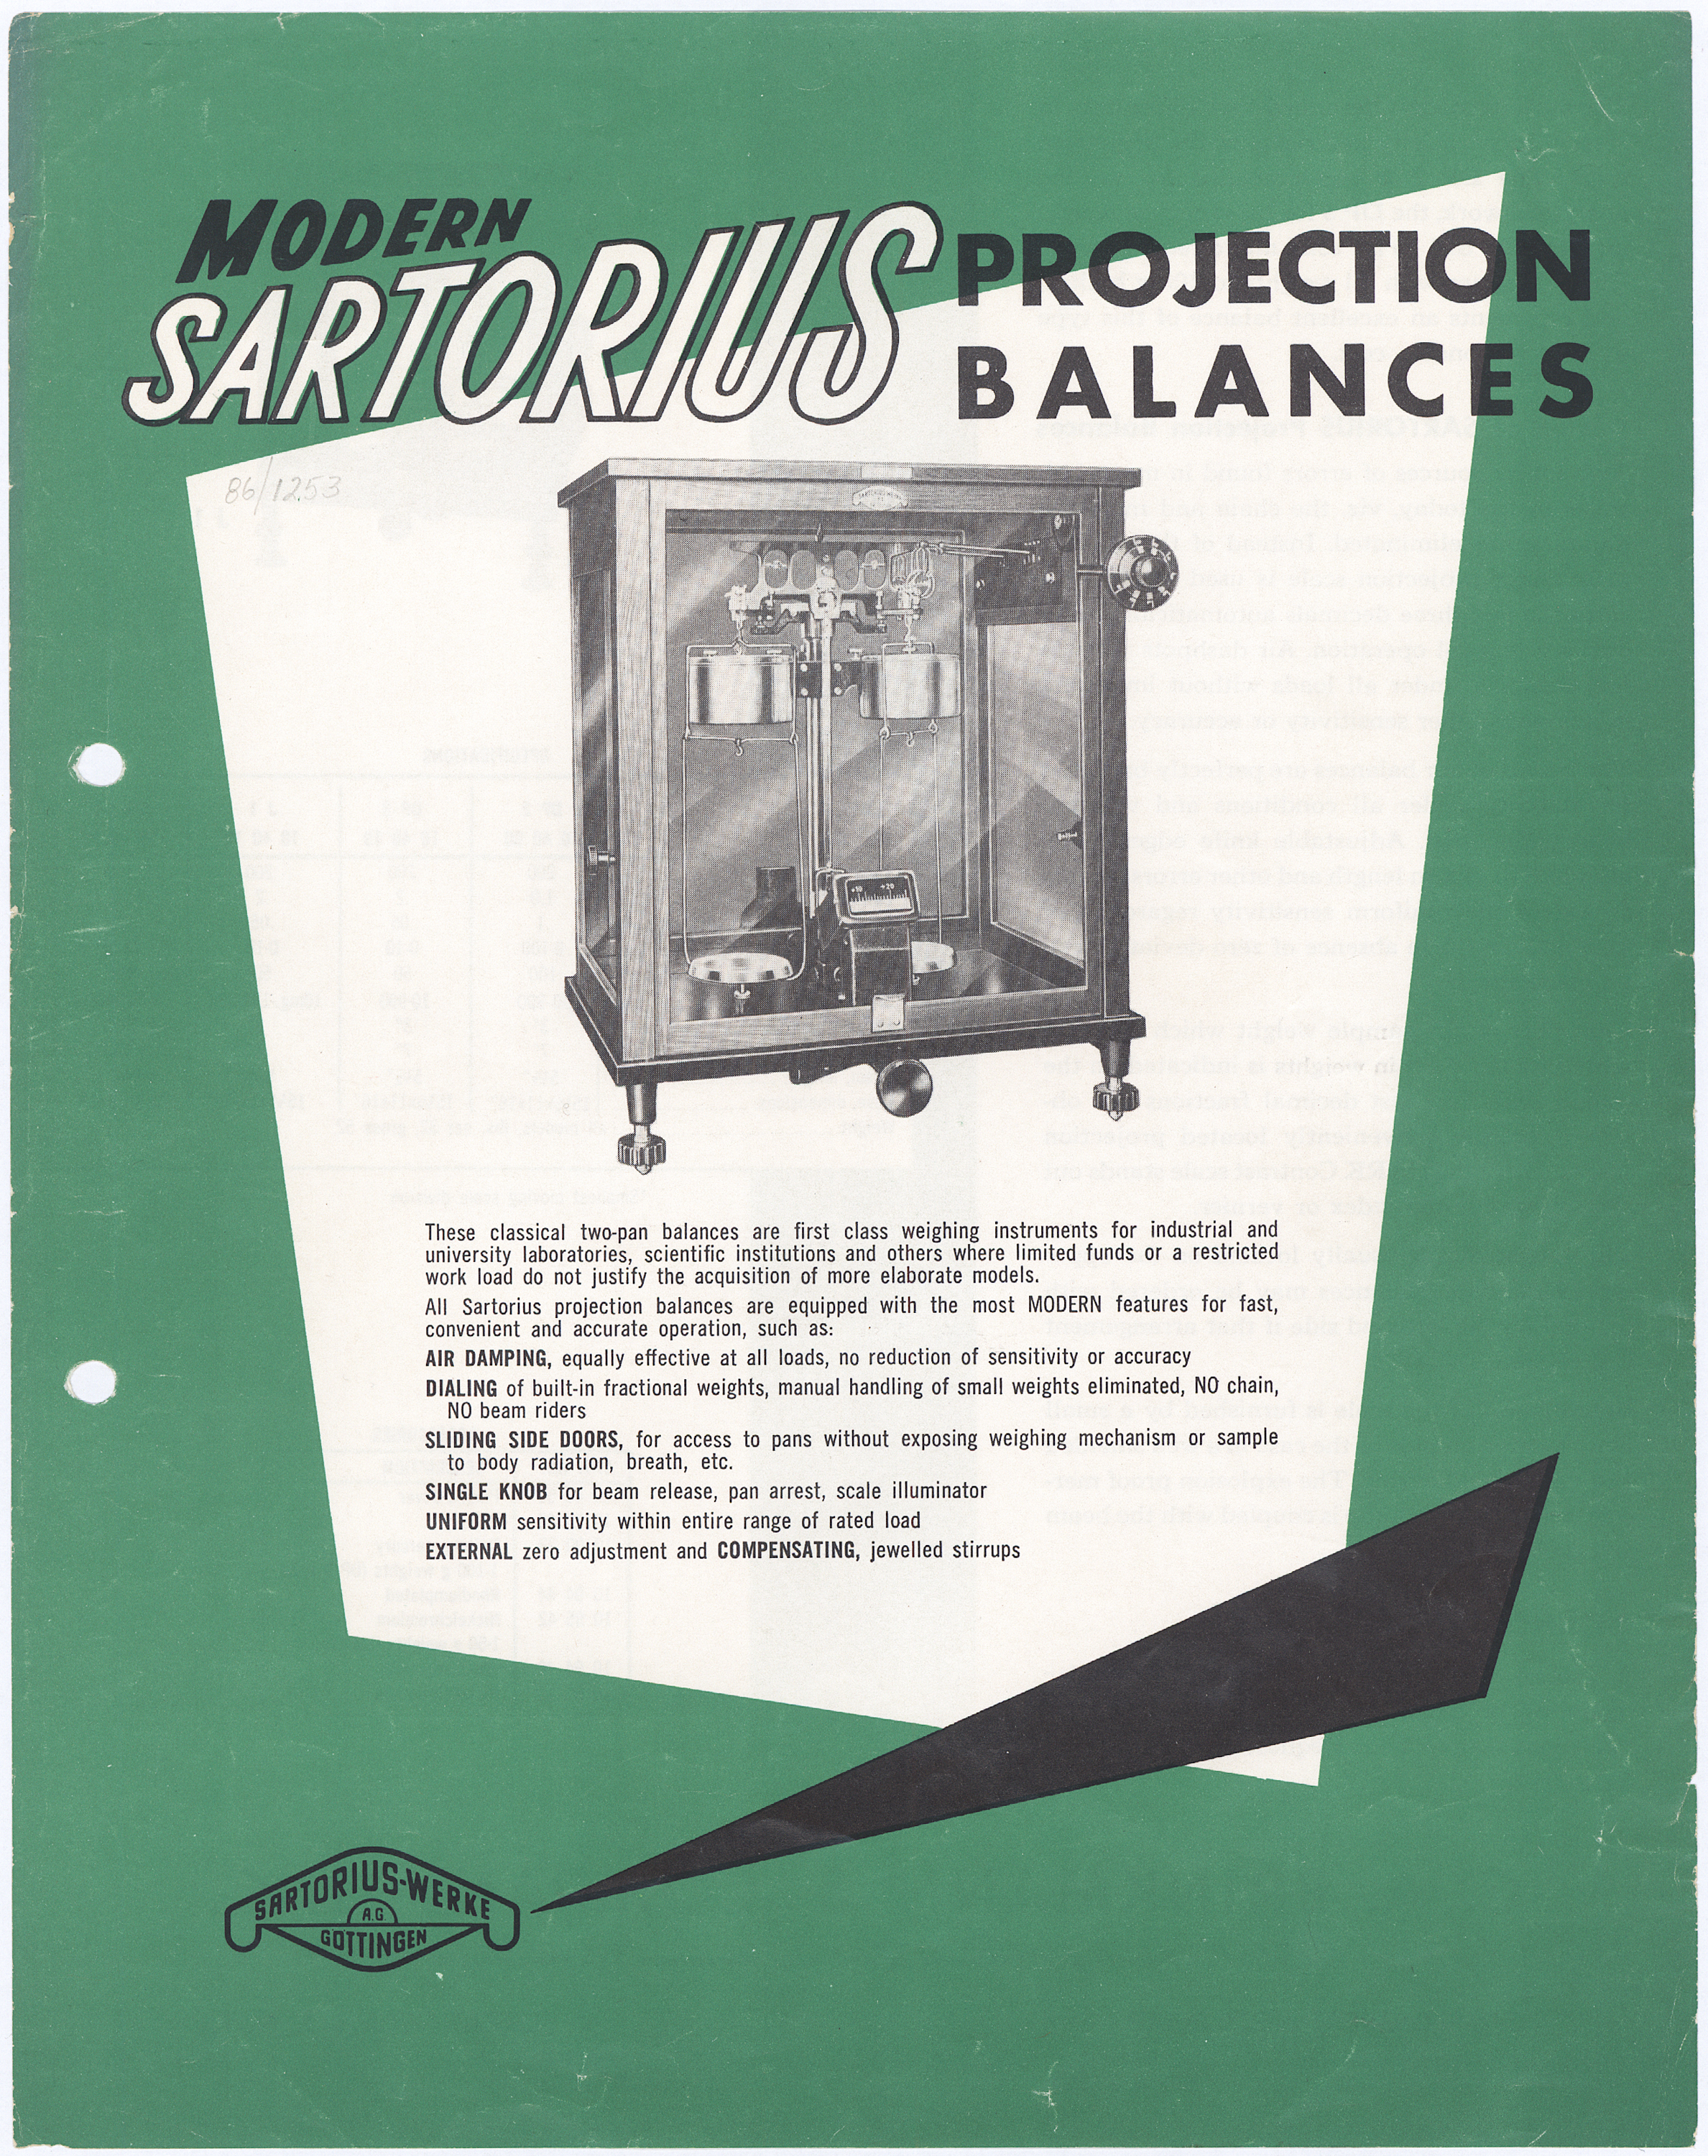 Sartorius-Werke mechanical analytical balance